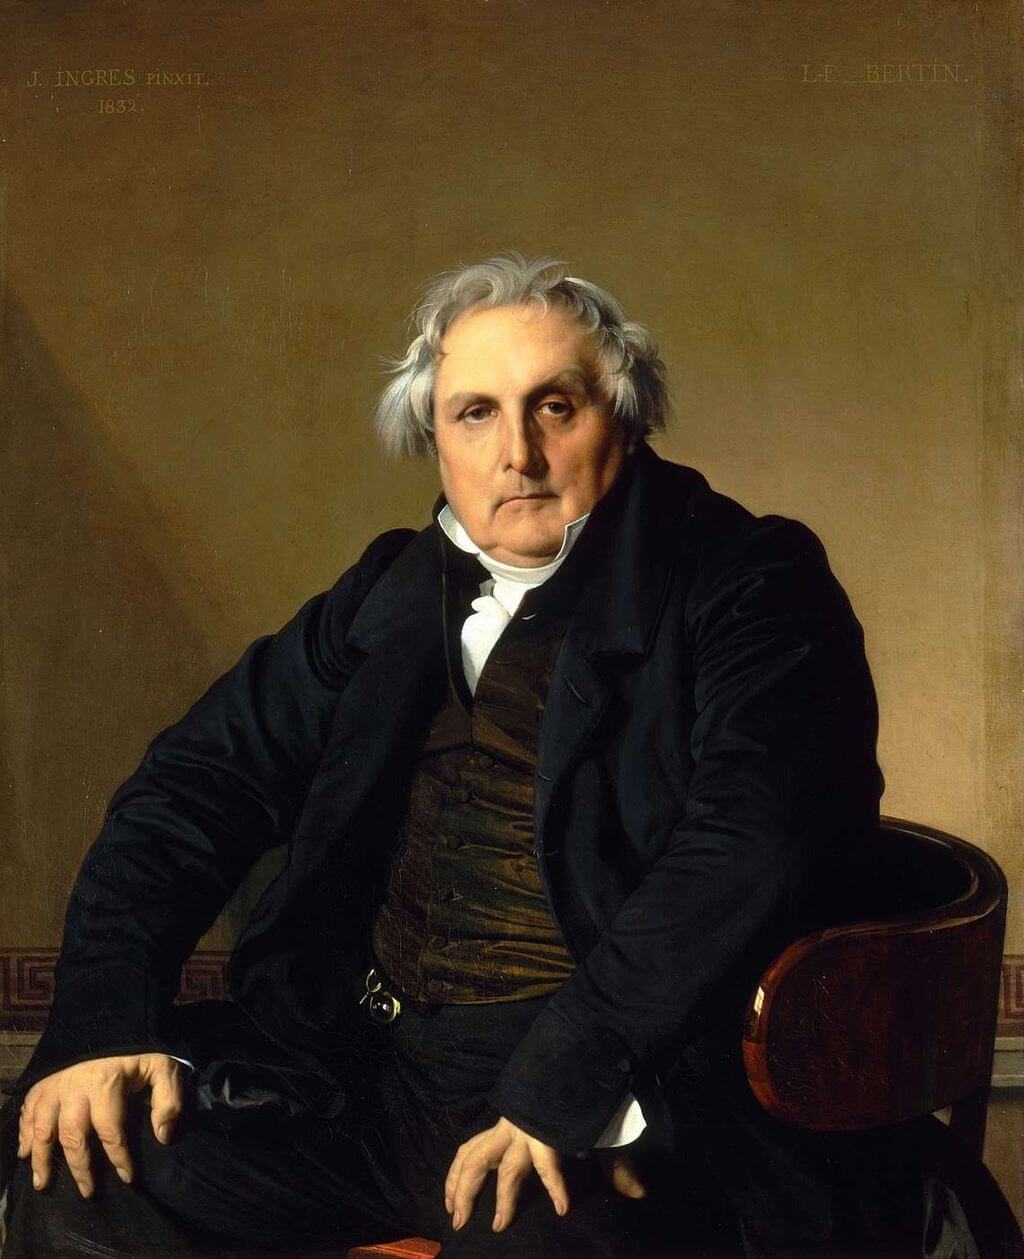 Portrait of Monsieur Bertin by Jean-Auguste-Dominique Ingres in the Louvre Museum in Paris